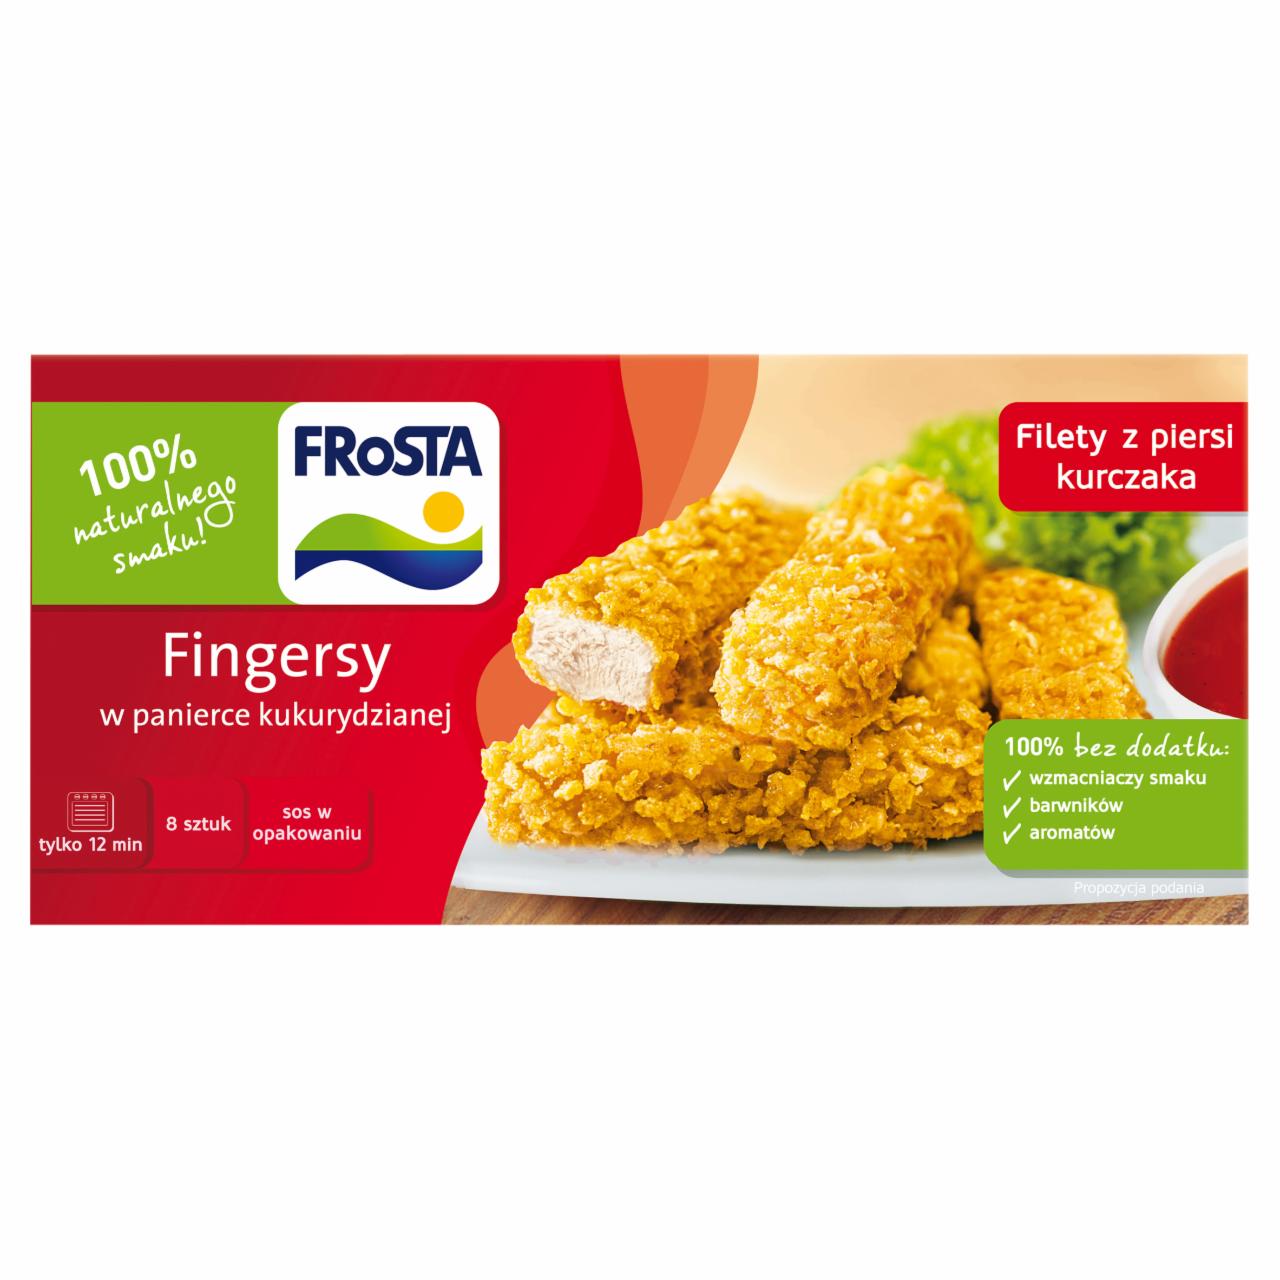 Photo - FRoSTA Fingersy in Corn Breadcrumbs 240 g (8 Pieces) plus Sauce 28 g